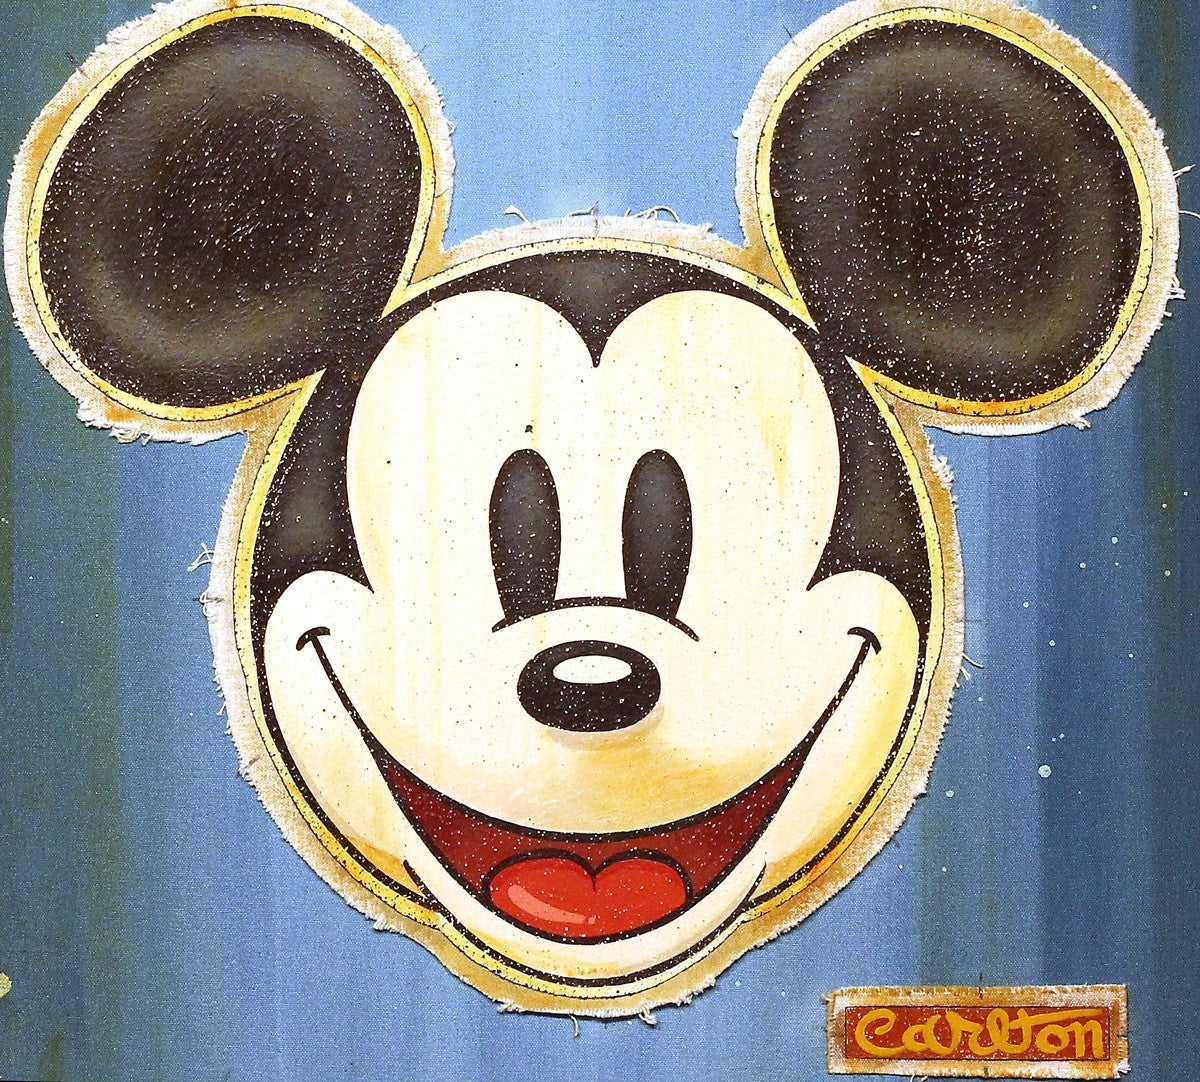 Mickey Mouse Club House - ORIGINAL Disney